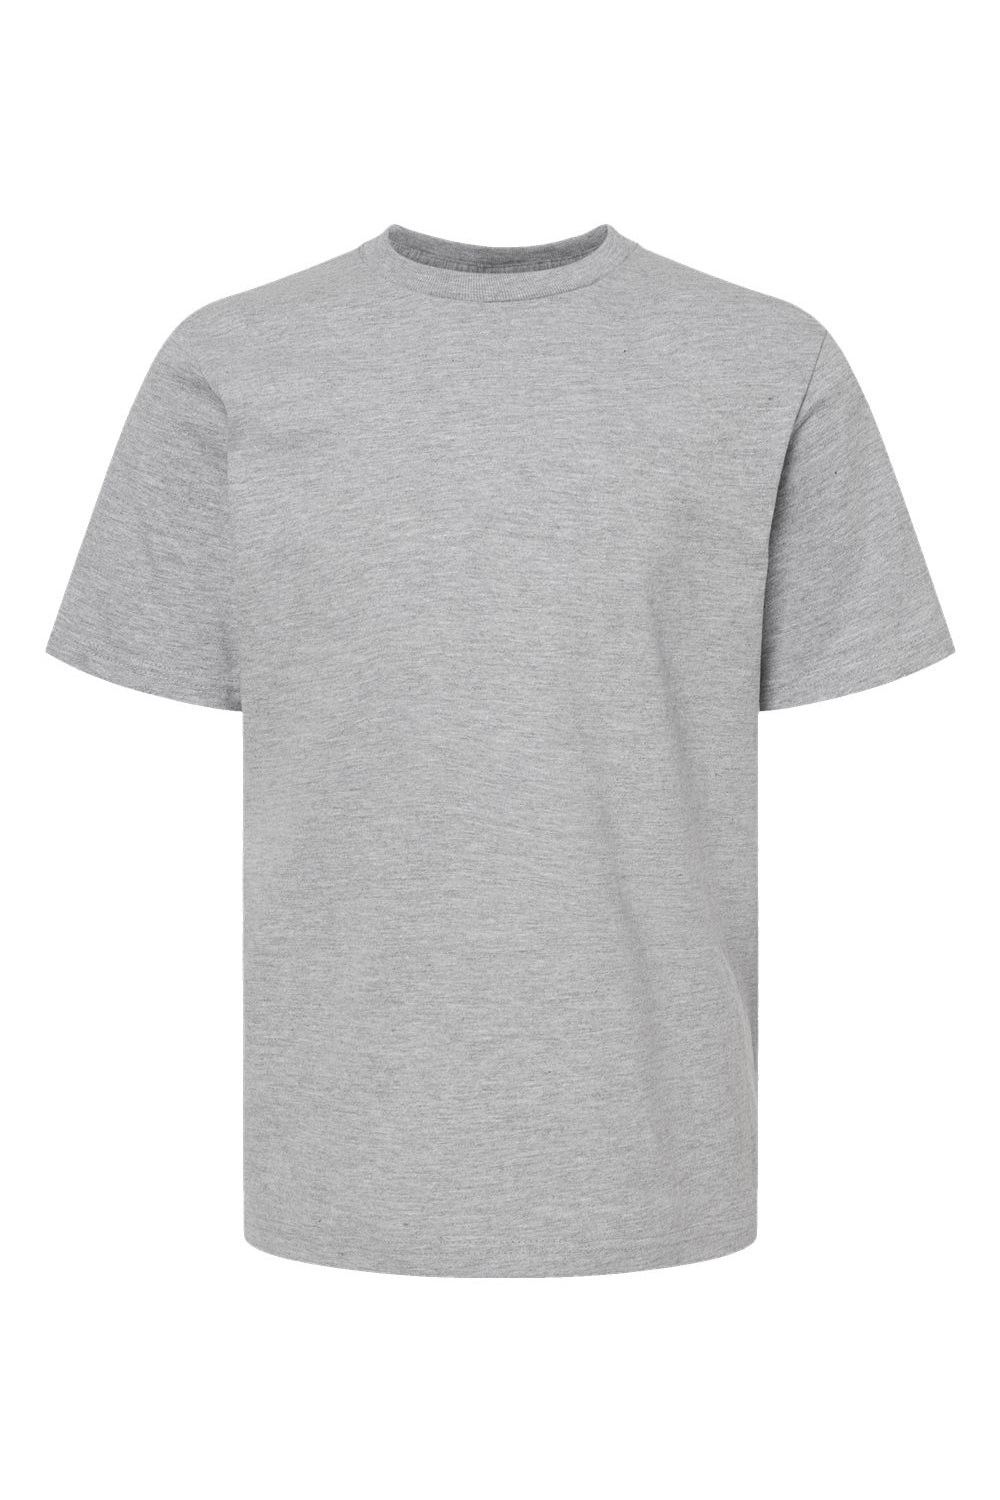 Tultex 295 Youth Jersey Short Sleeve Crewneck T-Shirt Heather Grey Flat Front